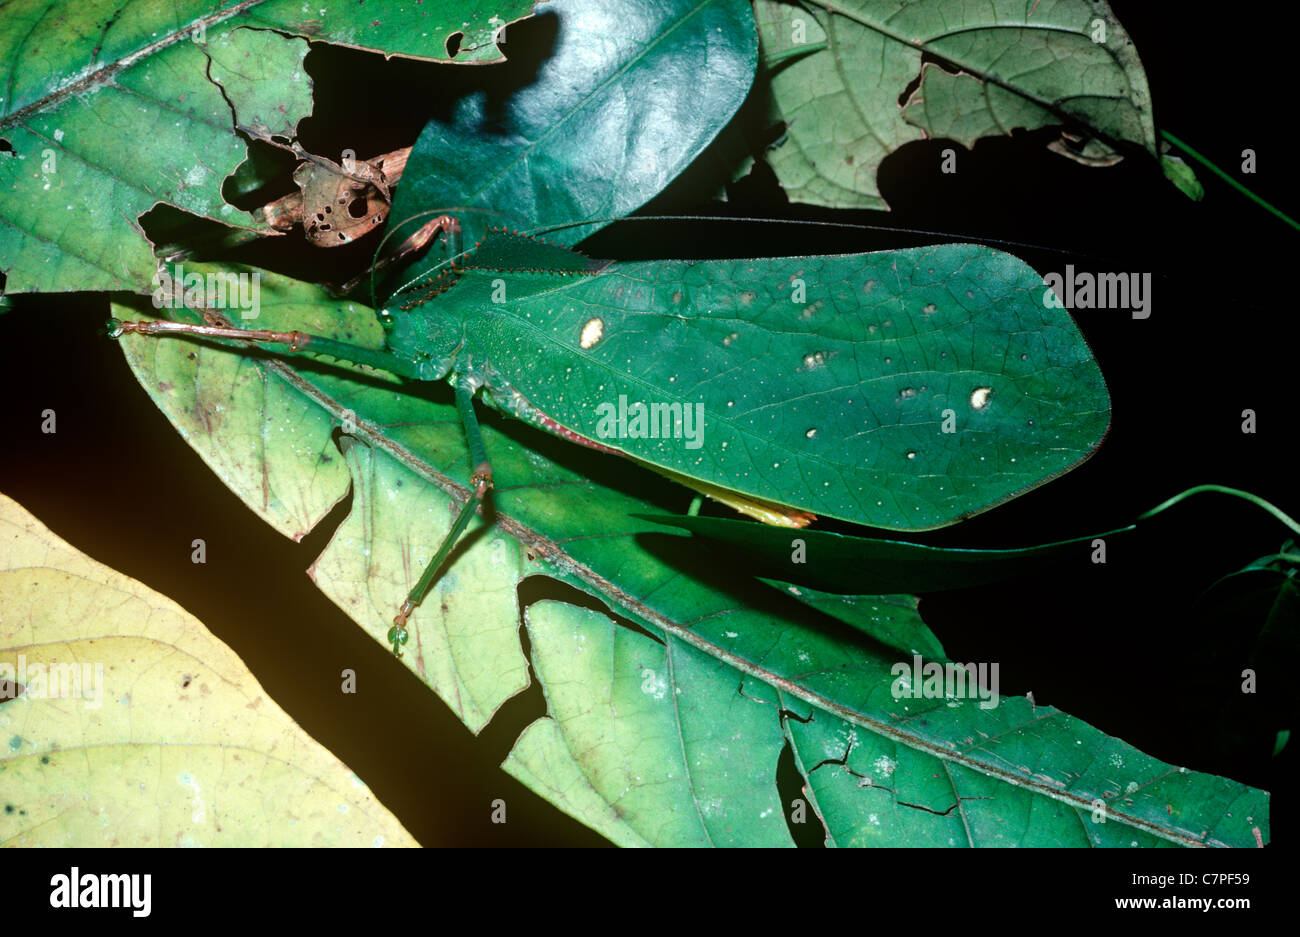 Bush-cricket / katydid (Sasima truncata: Tettigoniidae) resembling a green leaf in rainforest, New guinea Stock Photo